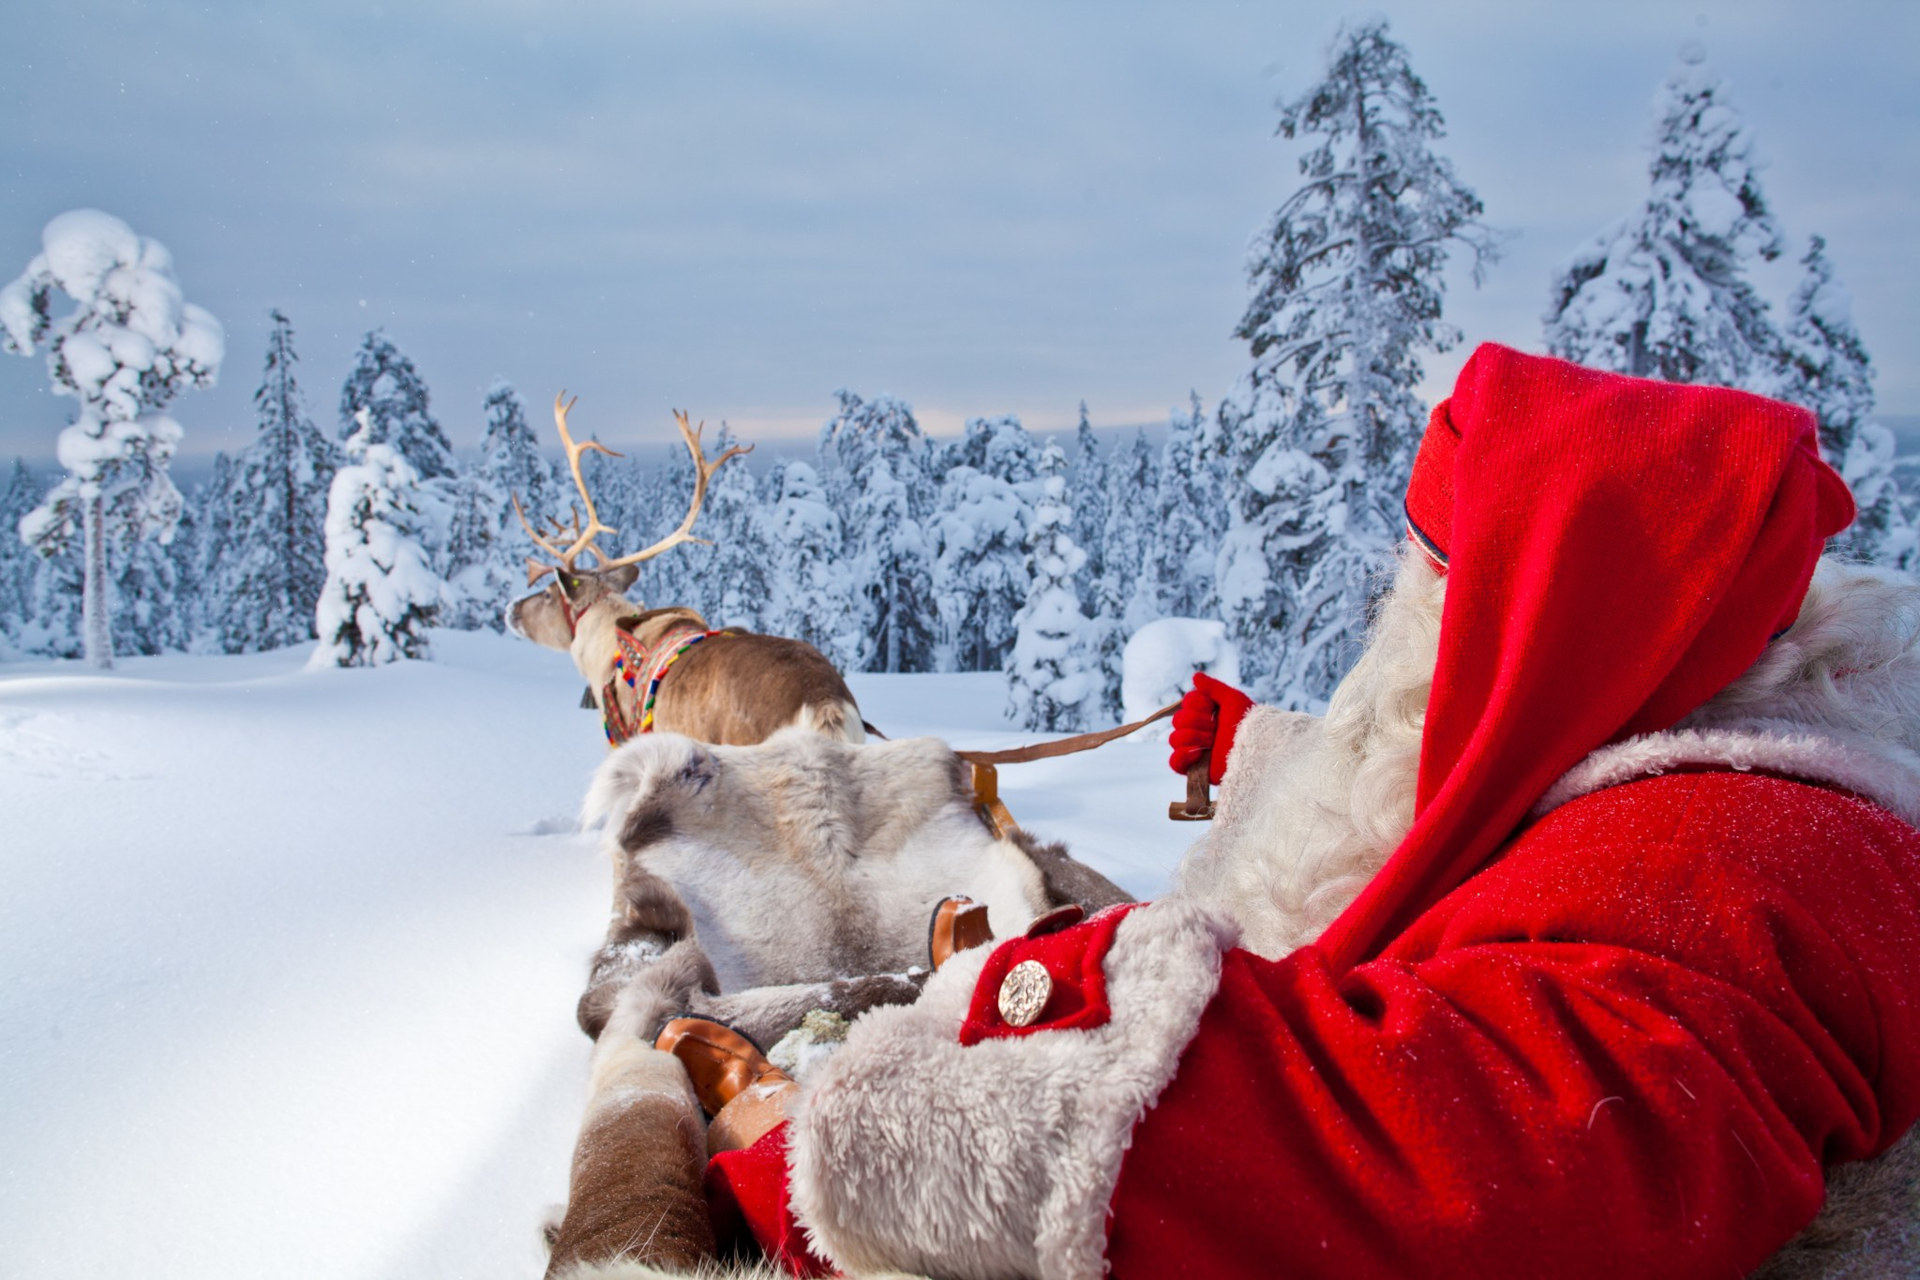 Santa Claus Reindeer Games And Sleigh Rides Visit Finnish Lapland